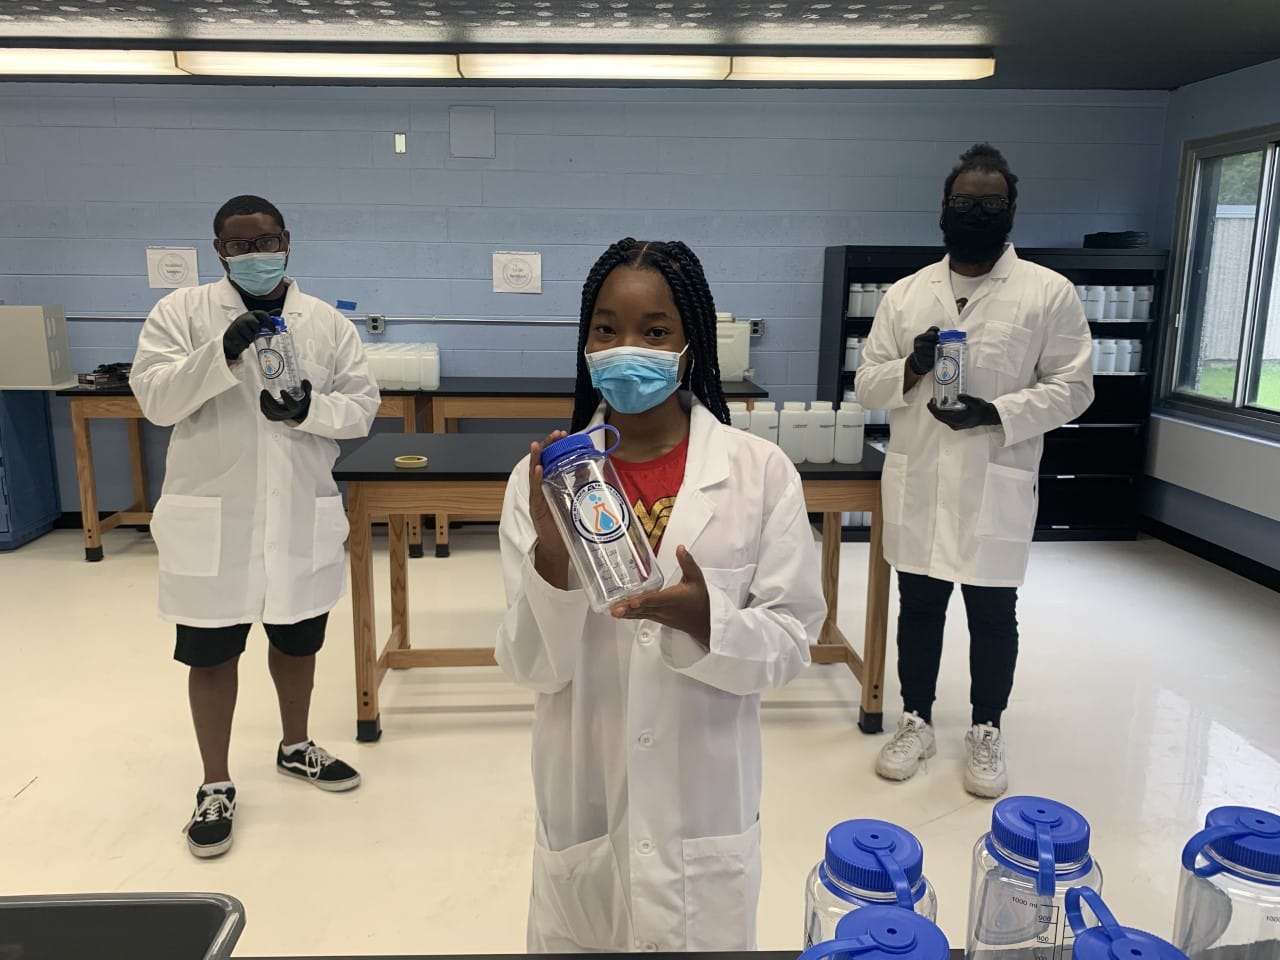 Thermofischer scientists in a lab making nalgene bottles